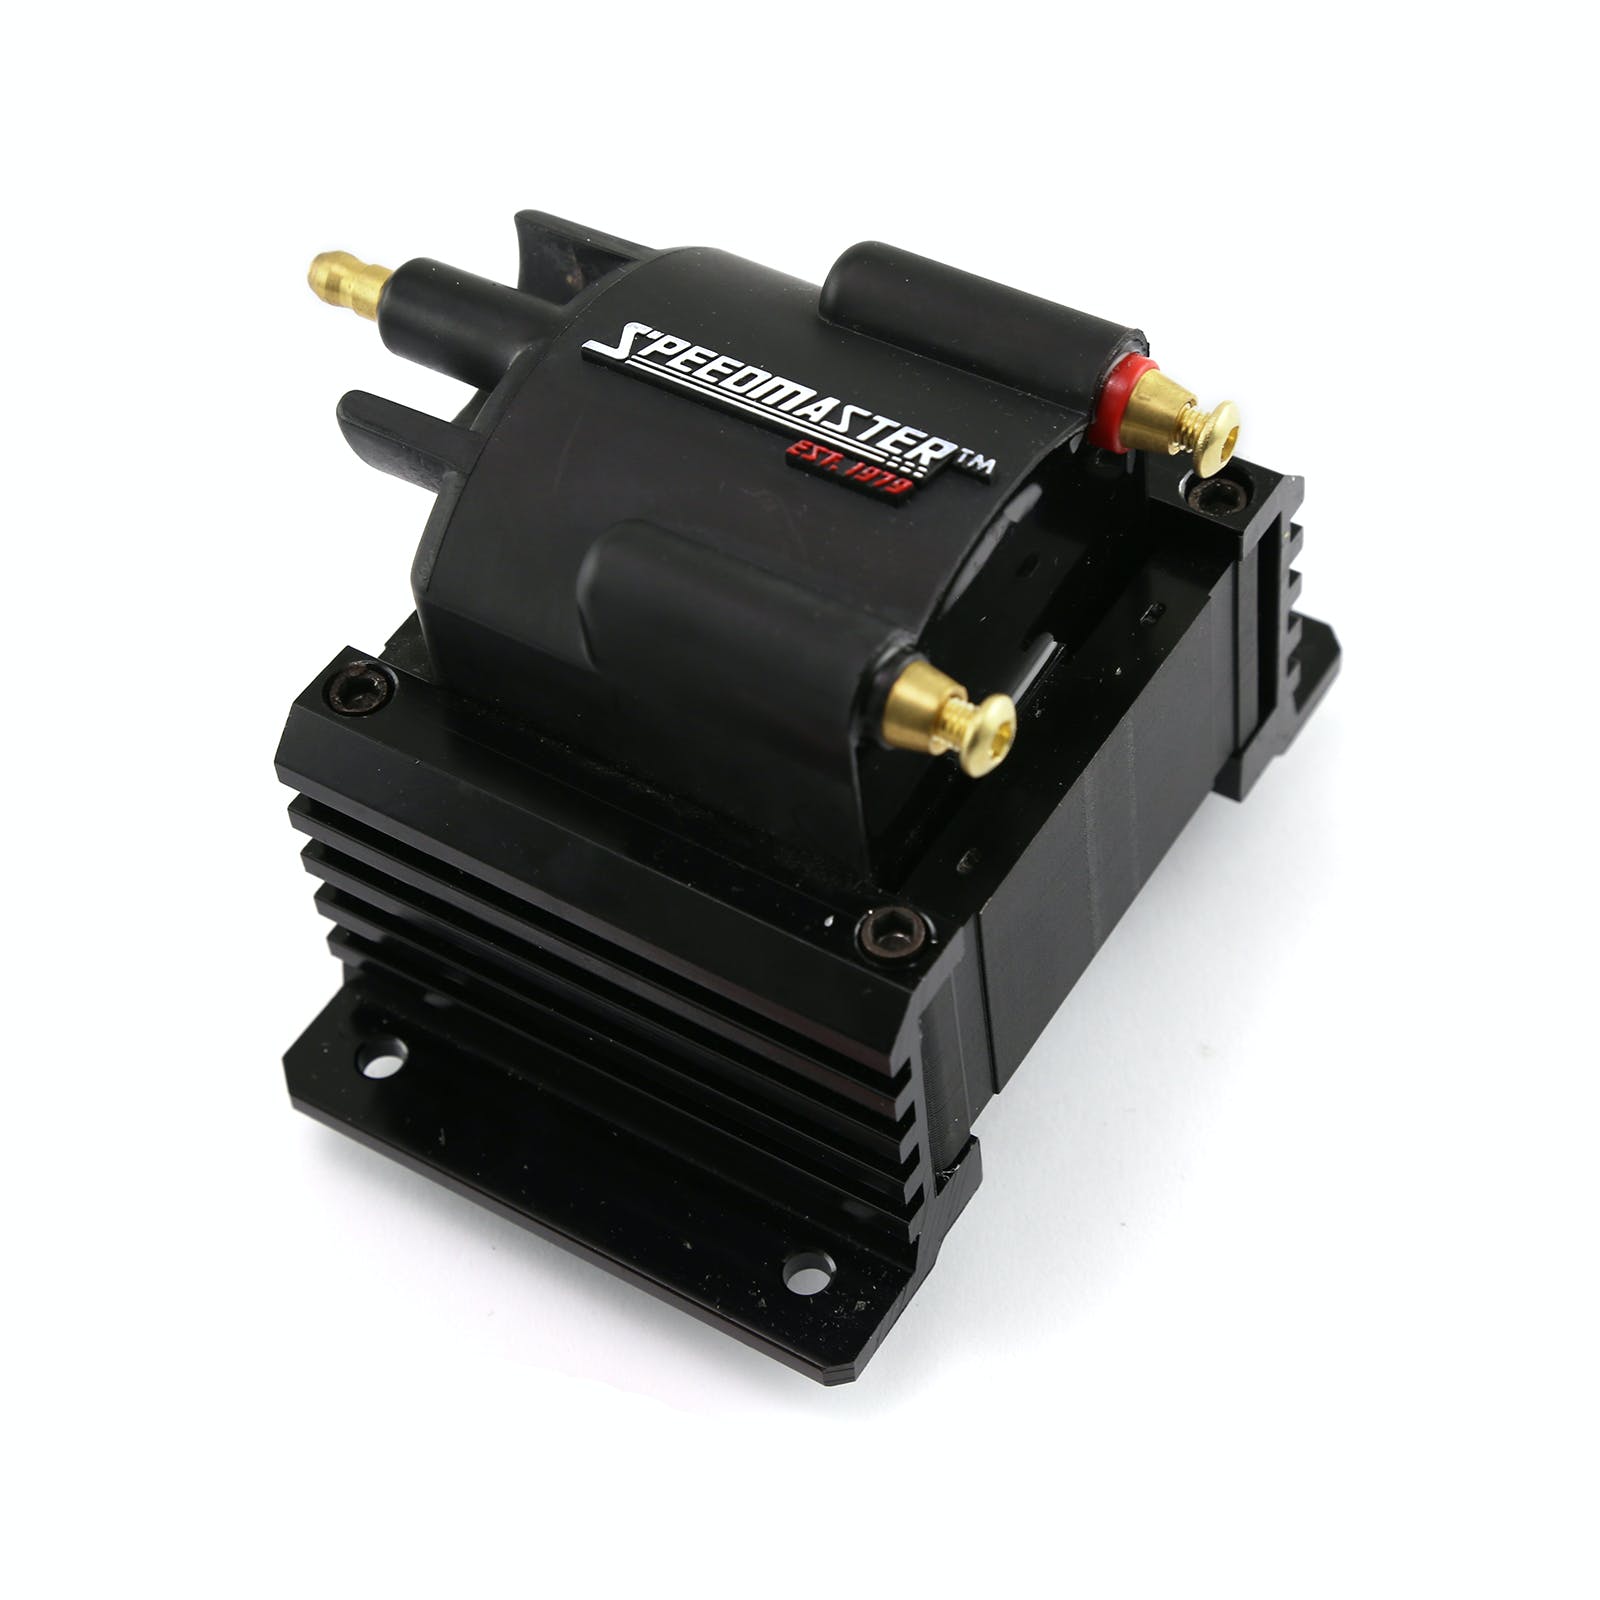 Speedmaster 1-385-008 Distributor Ignition Kit